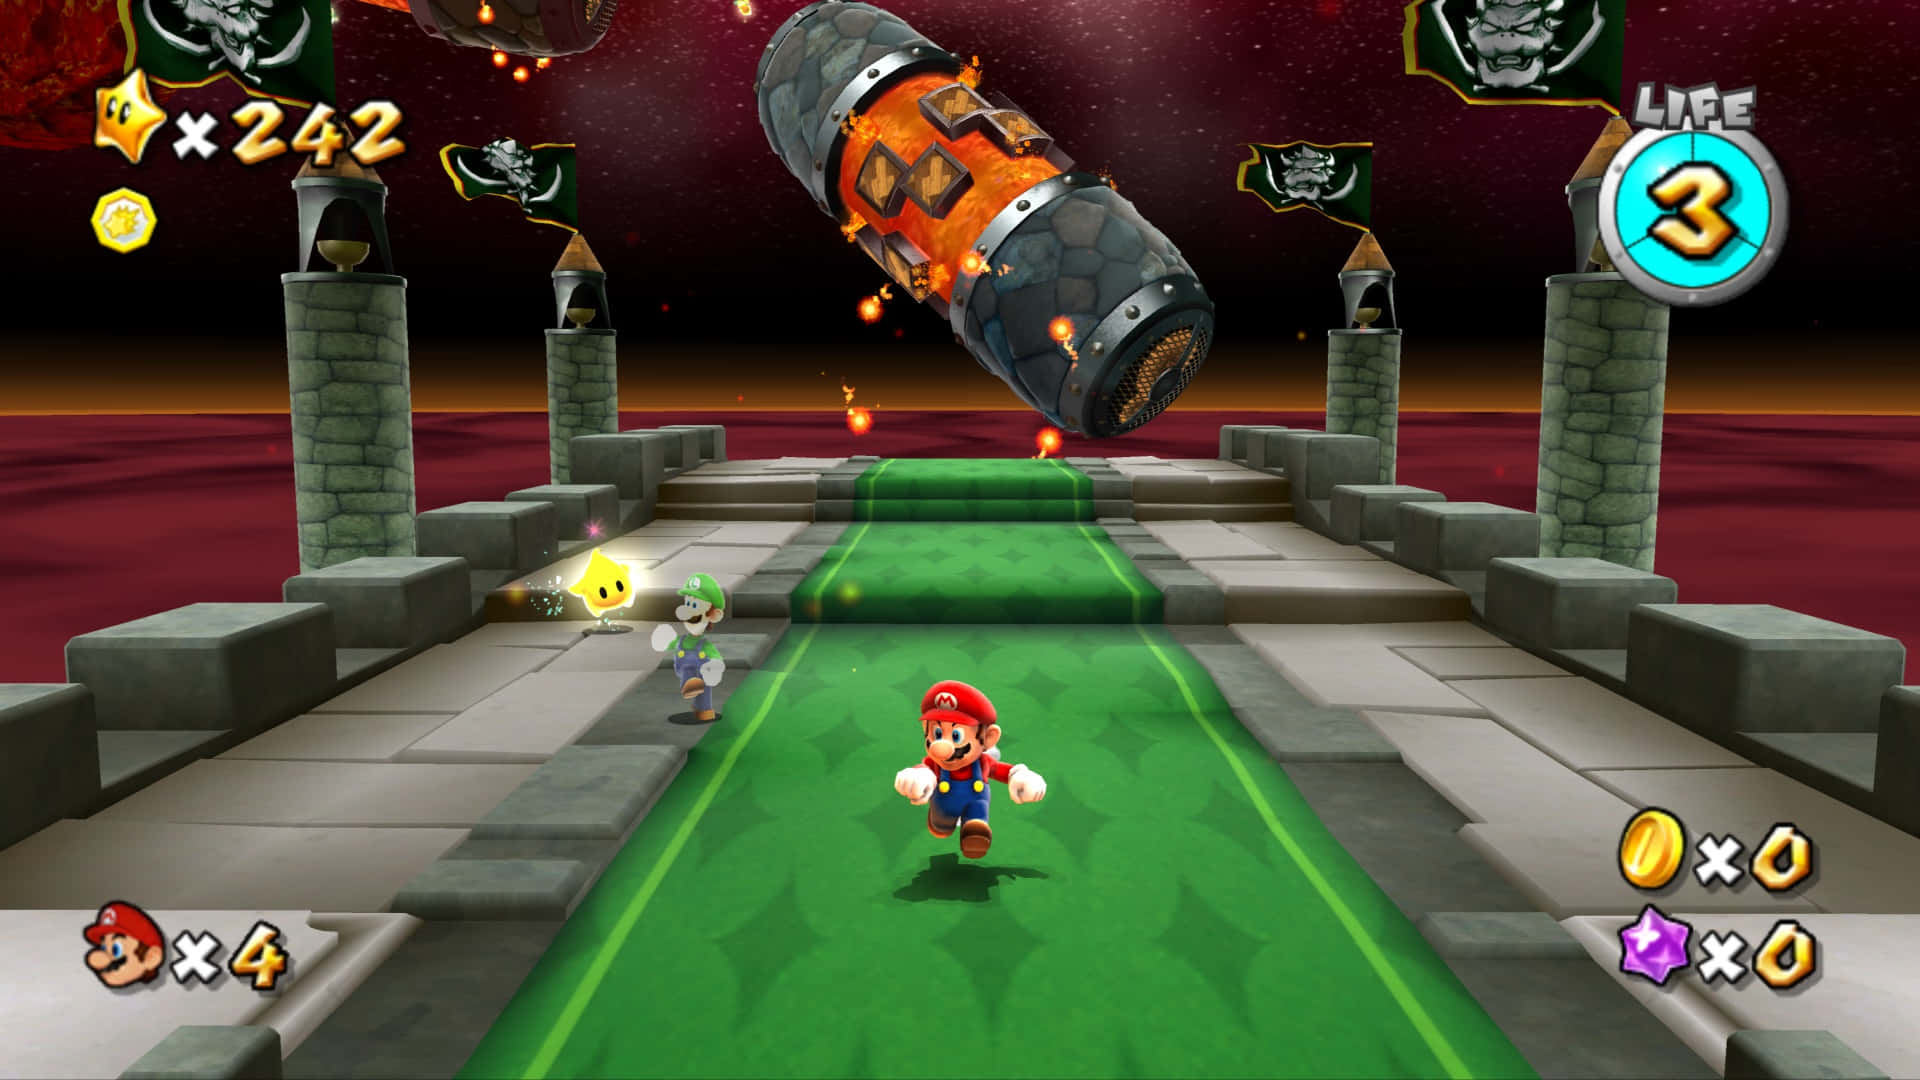 Super Mario Galaxy 2 - Mario flying through various planets and galaxies Wallpaper